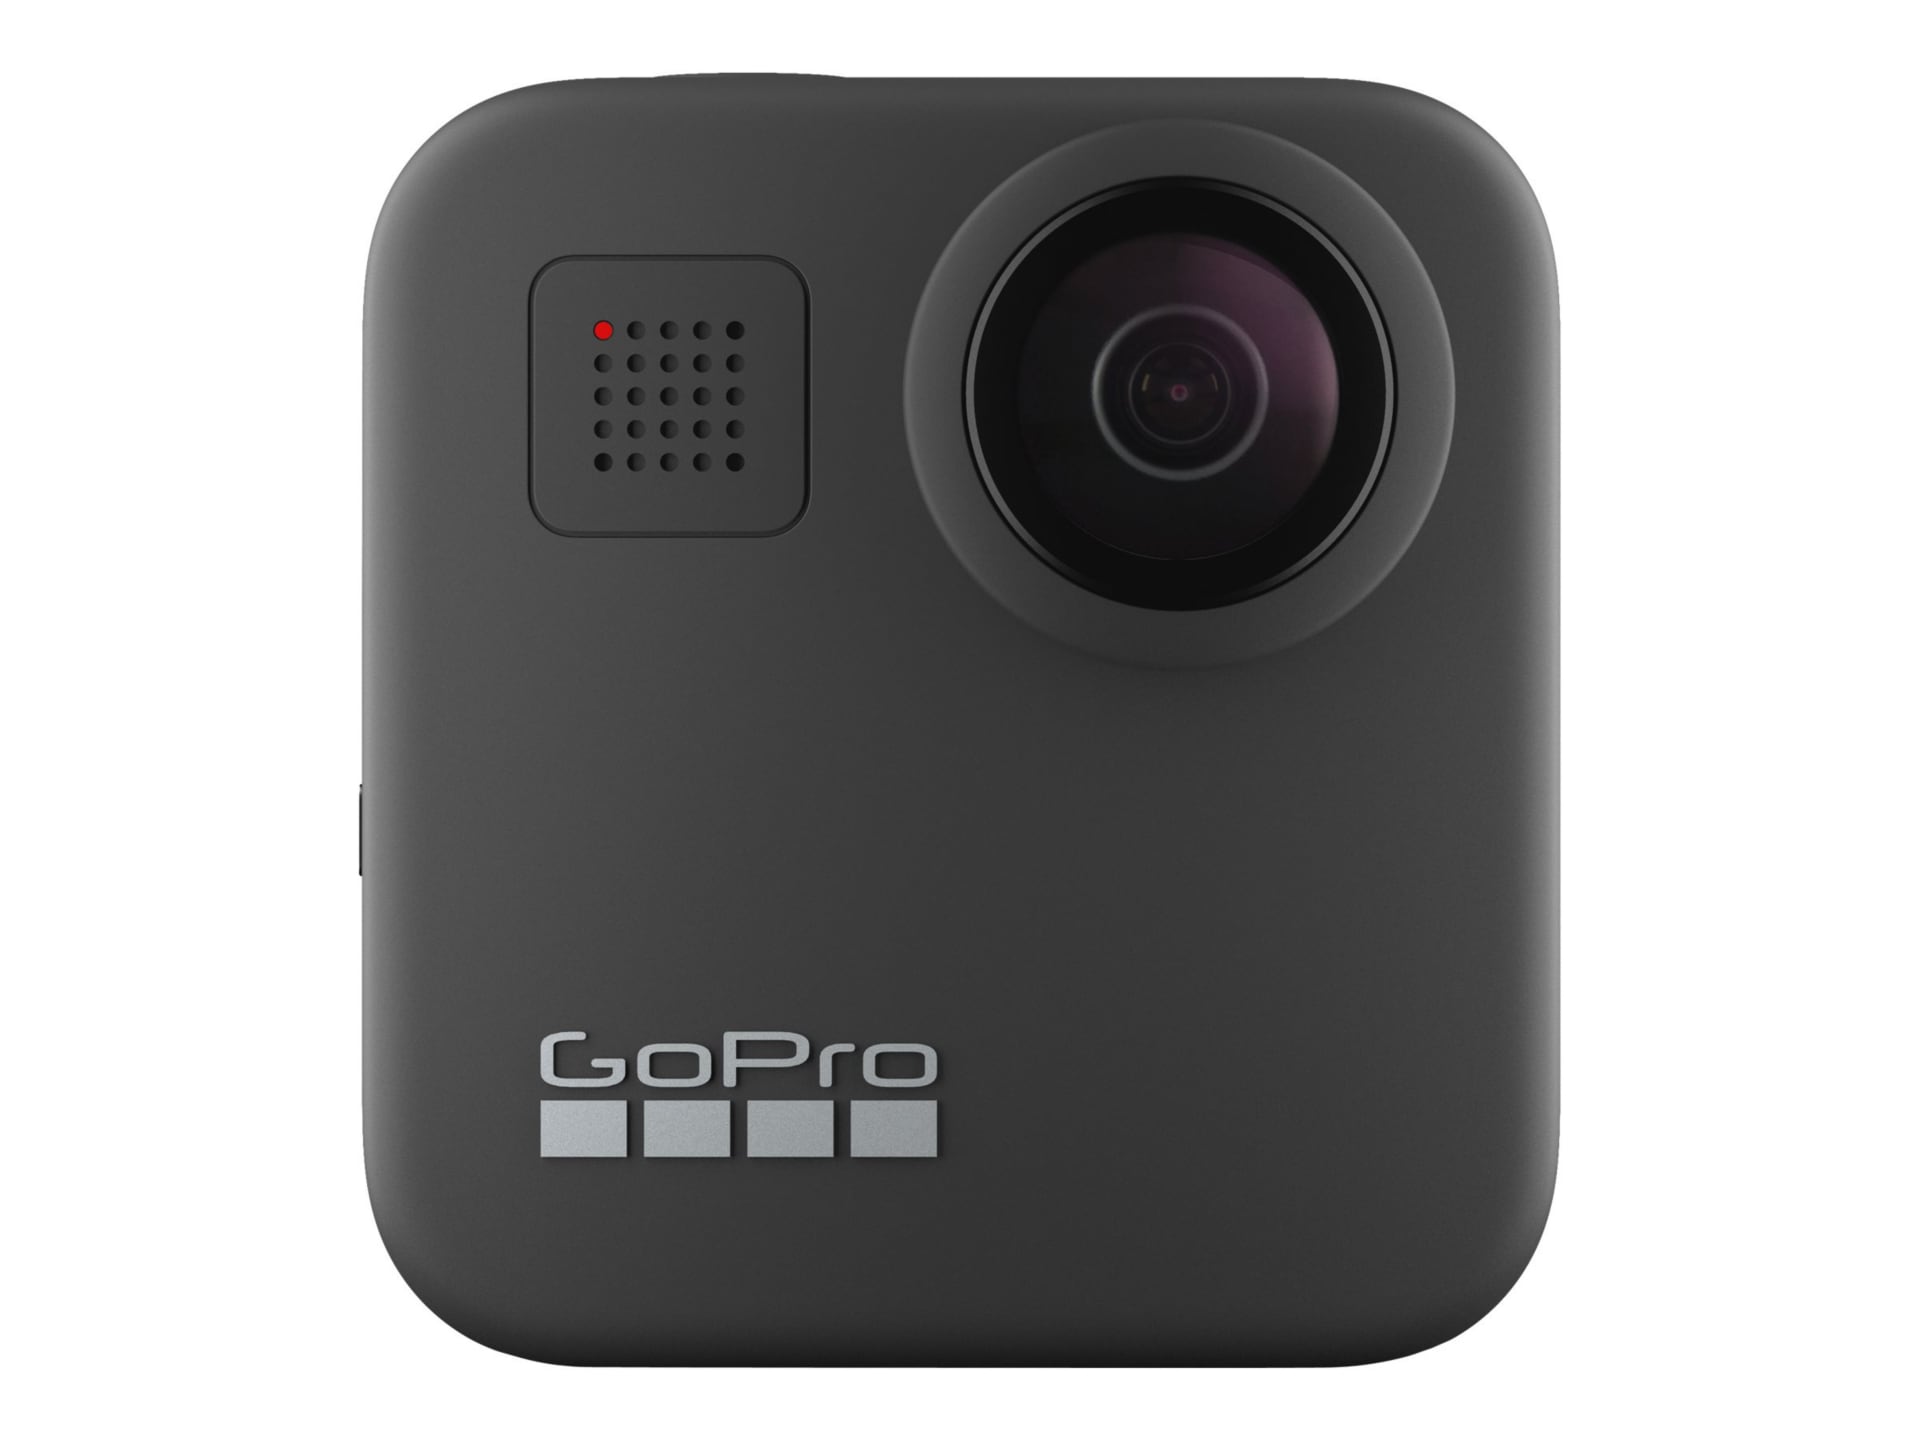 GoPro MAX - action camera